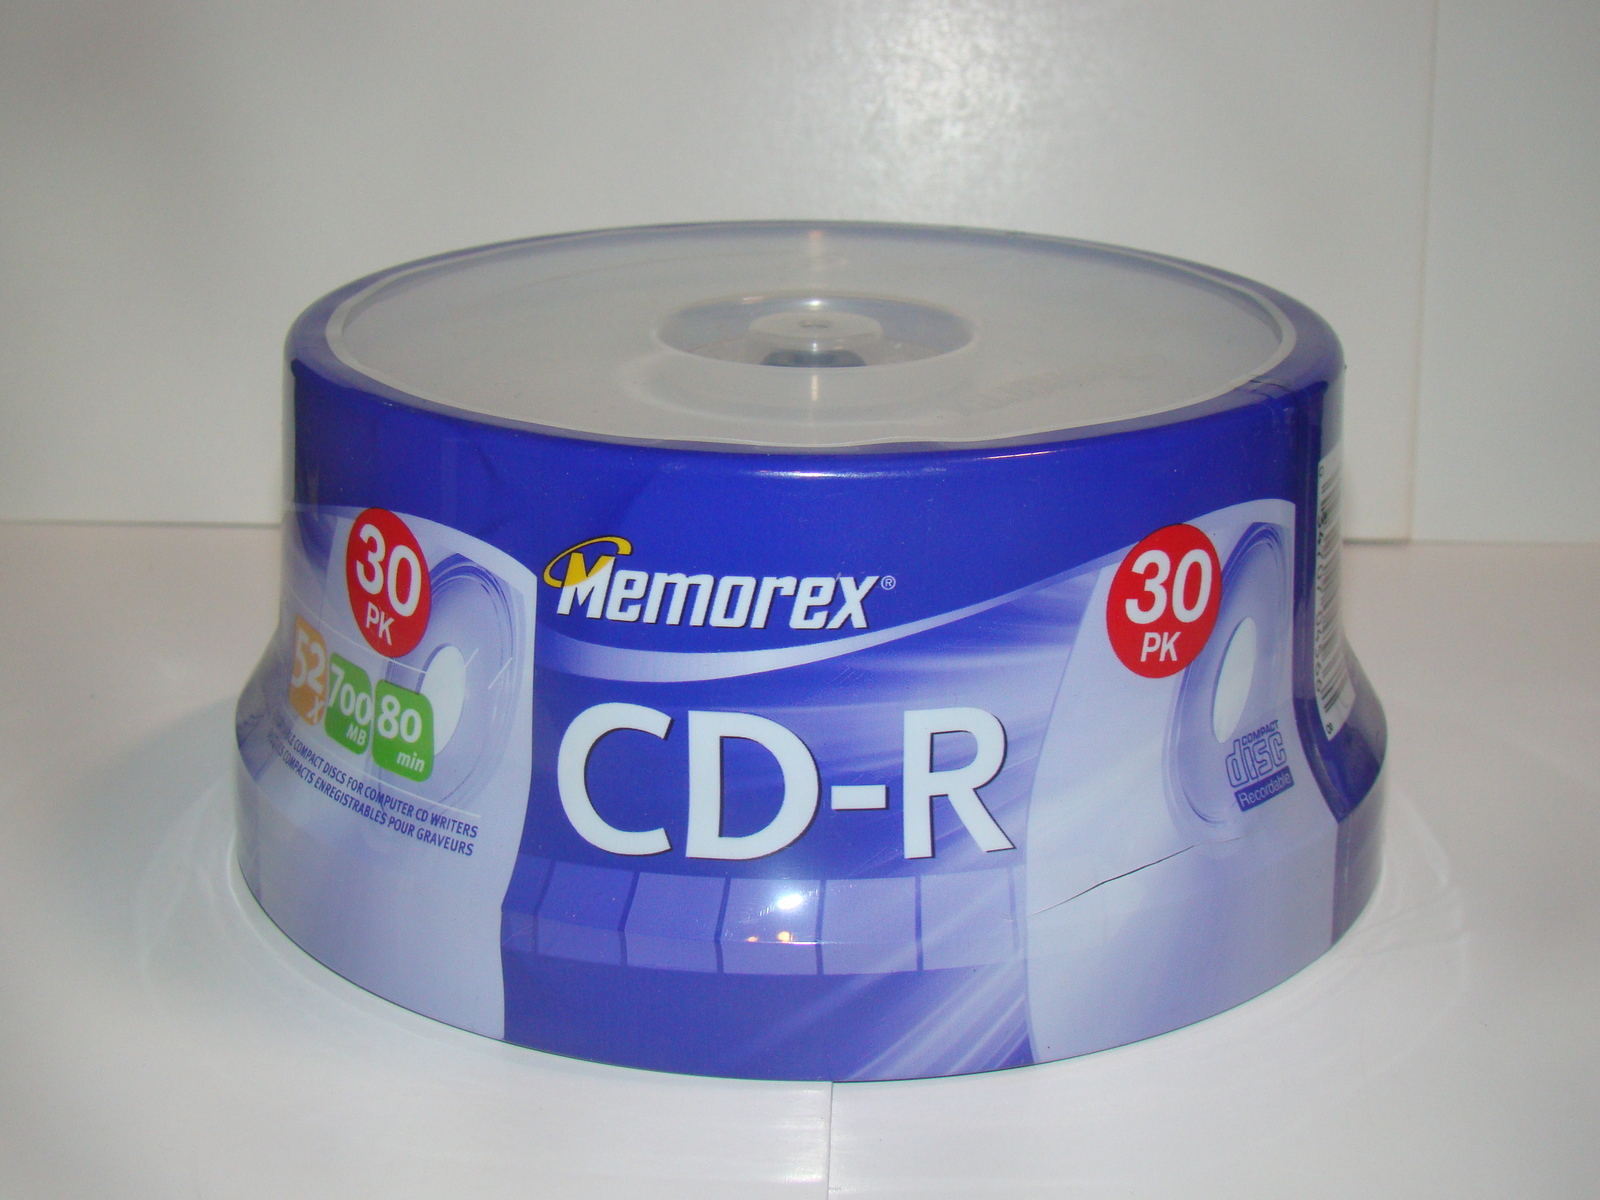 Memorex - CD-R - 52X 700MB 80min - 30PK (New) - $18.00